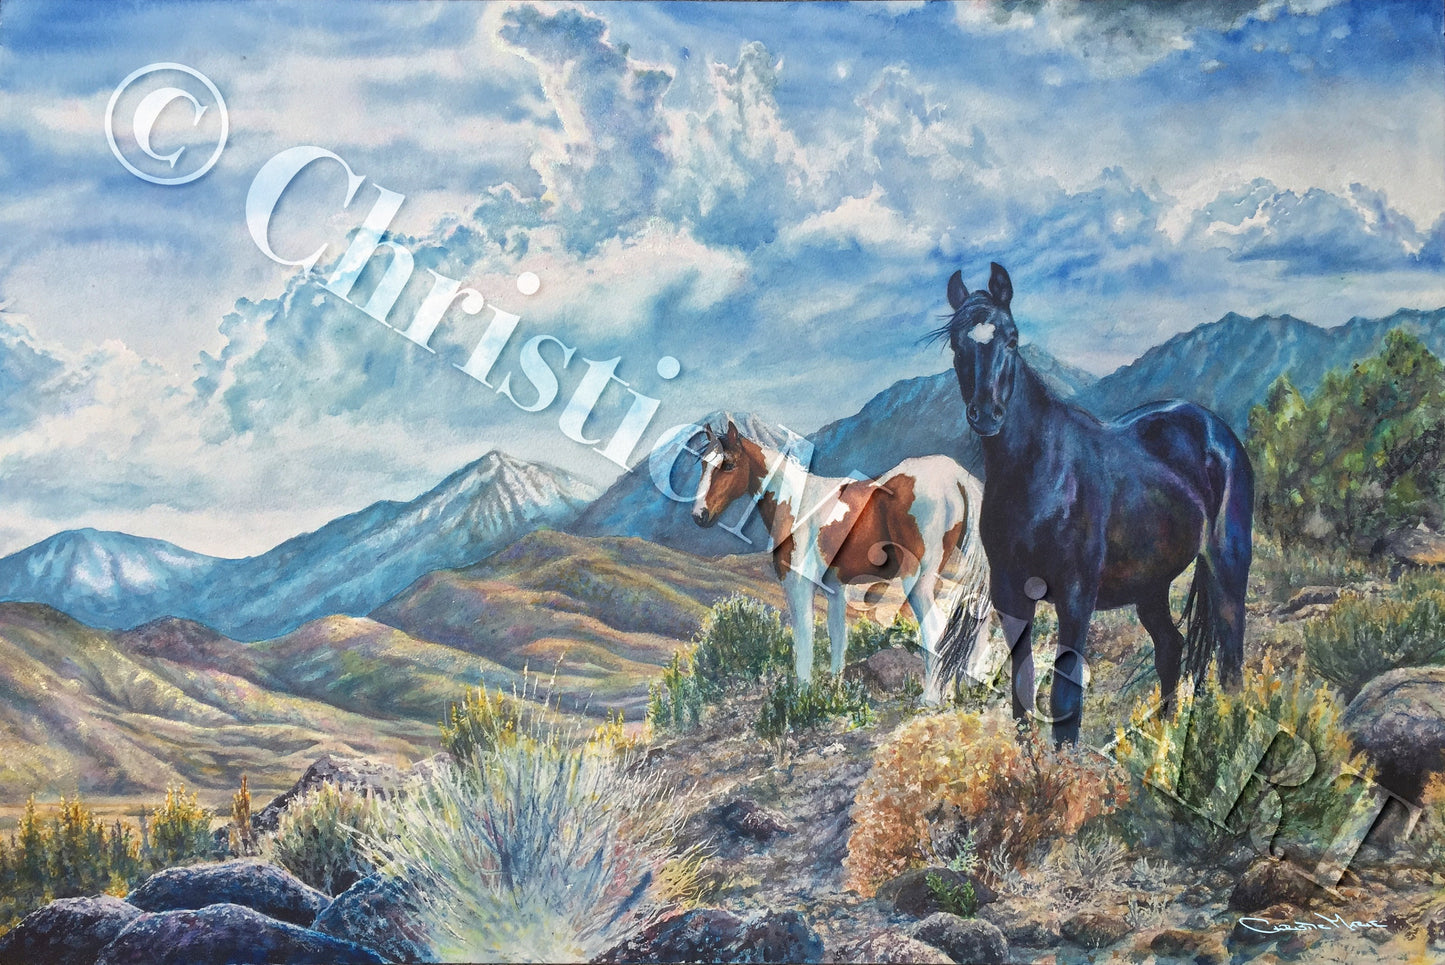 Mustangs Wild, Original Fine Art, professionally Framed, West Sierra Nevada Art Watercolor Painting by artist Christie Marie E. Russell ©